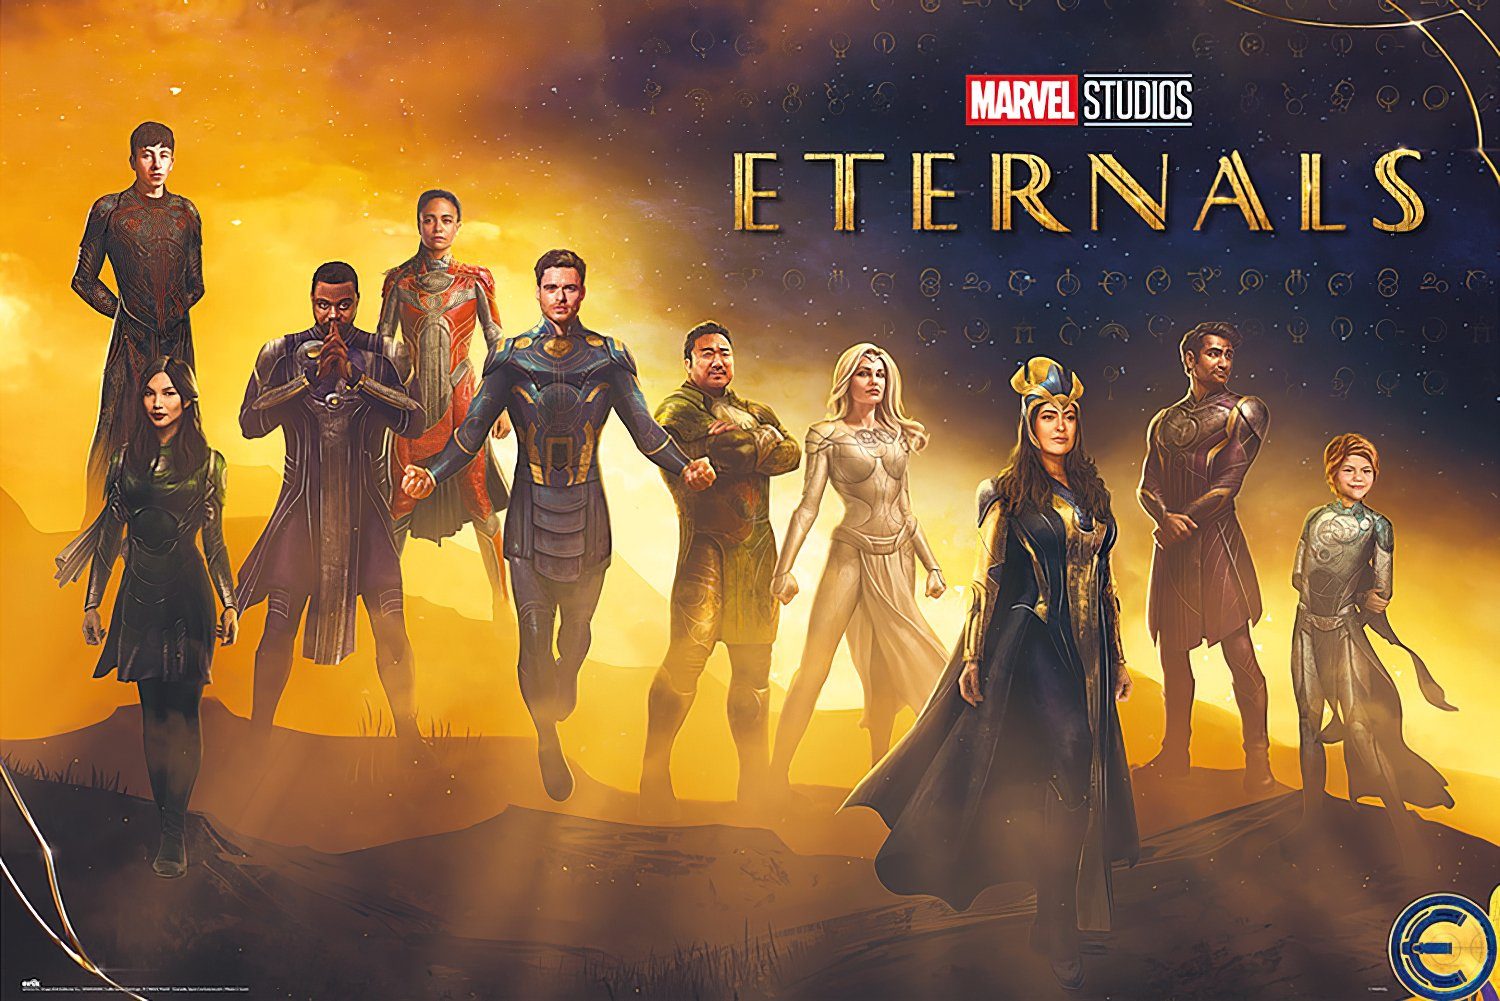 Grupo Erik Poster Eternals Poster Marvel, Group Angelina Jolie, Kit Harington